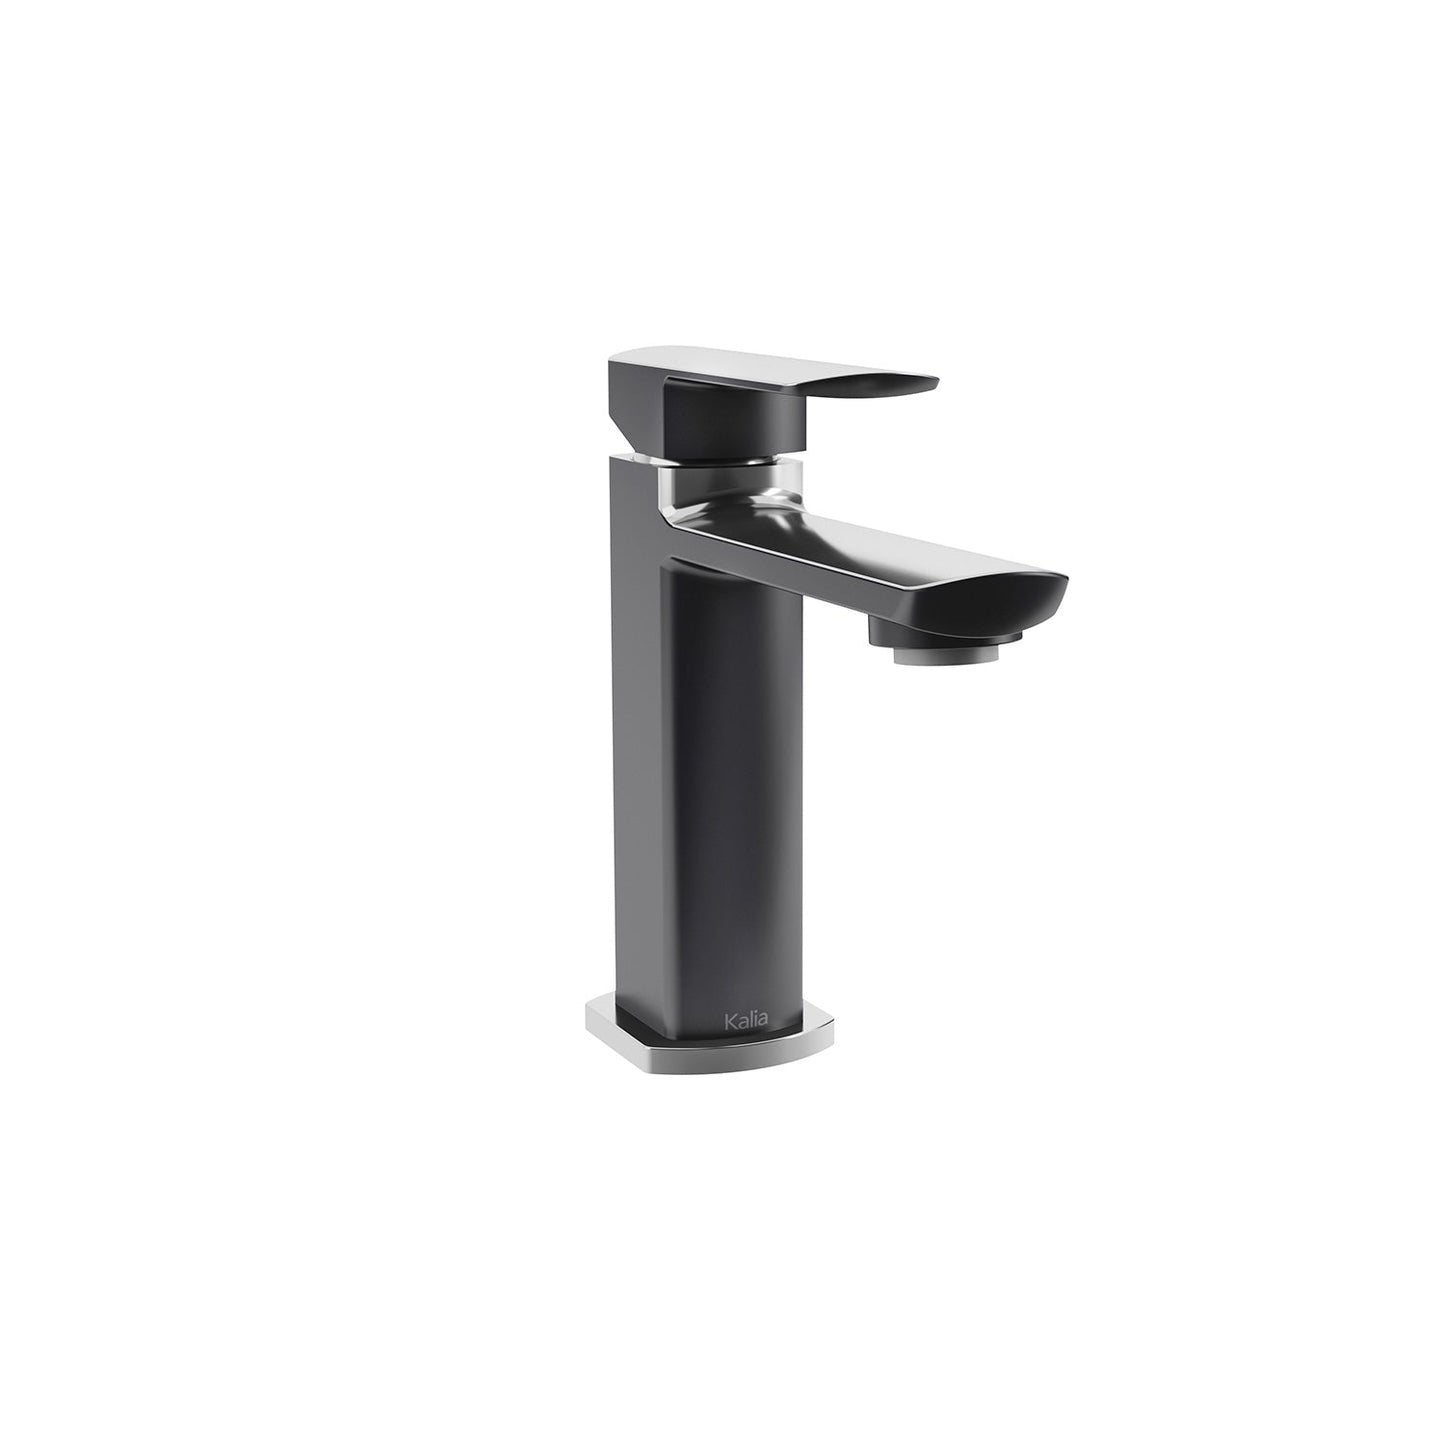 Kalia GRAFIK 5.75" Single Hole Bathroom Lavatory Faucet with Pop up Drain- Chrome/Black